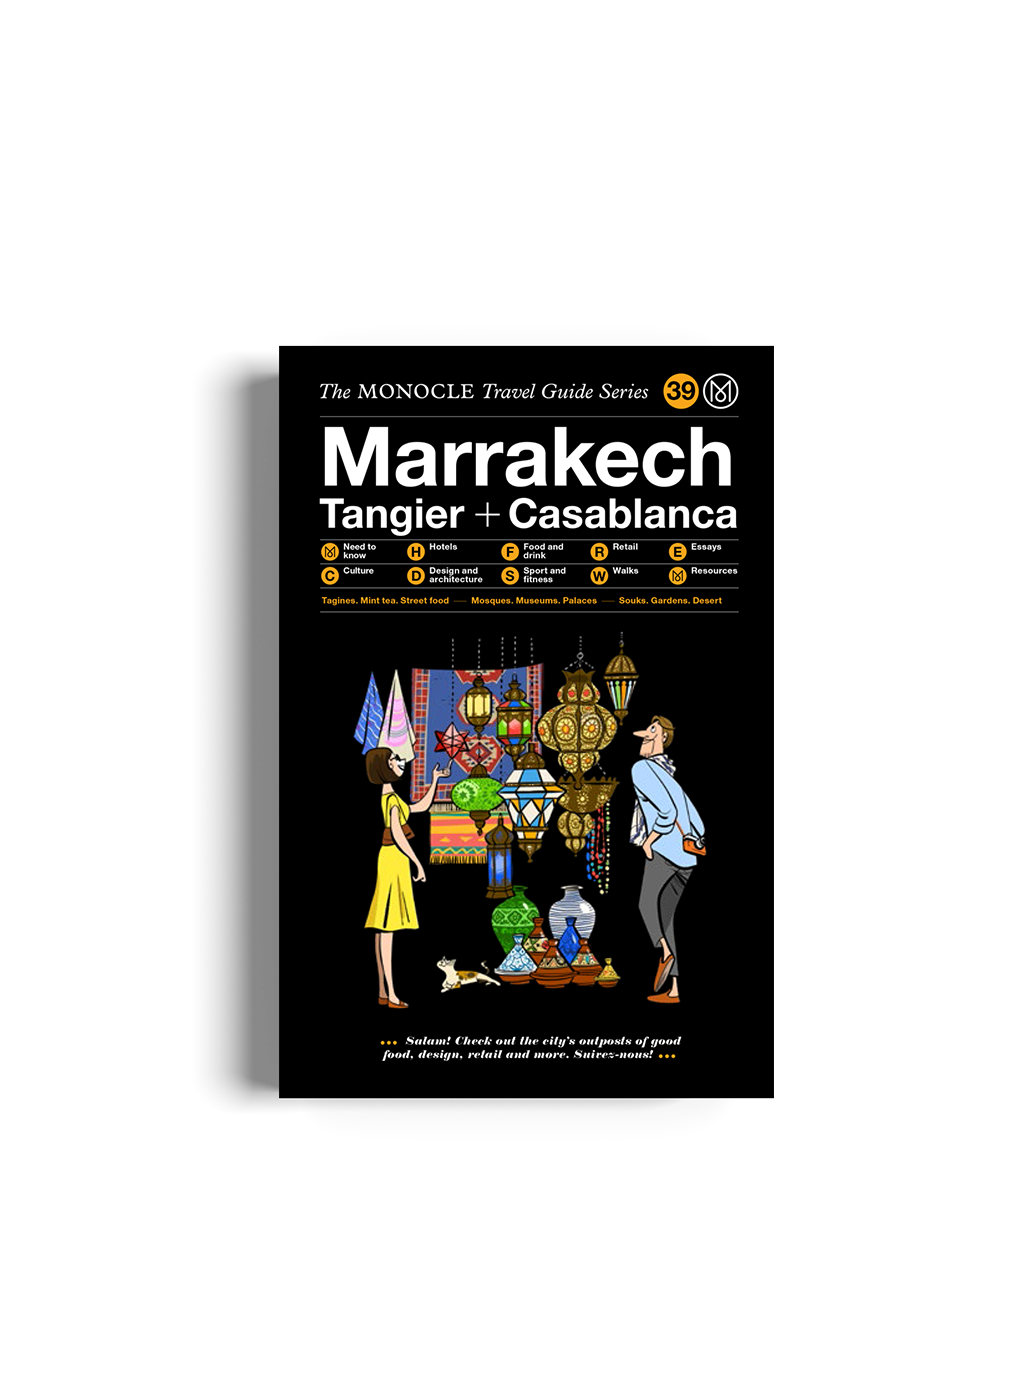 MARRAKECH, TANGIER + CASABLANCA. THE MONOCLE TRAVEL GUIDE SERIES